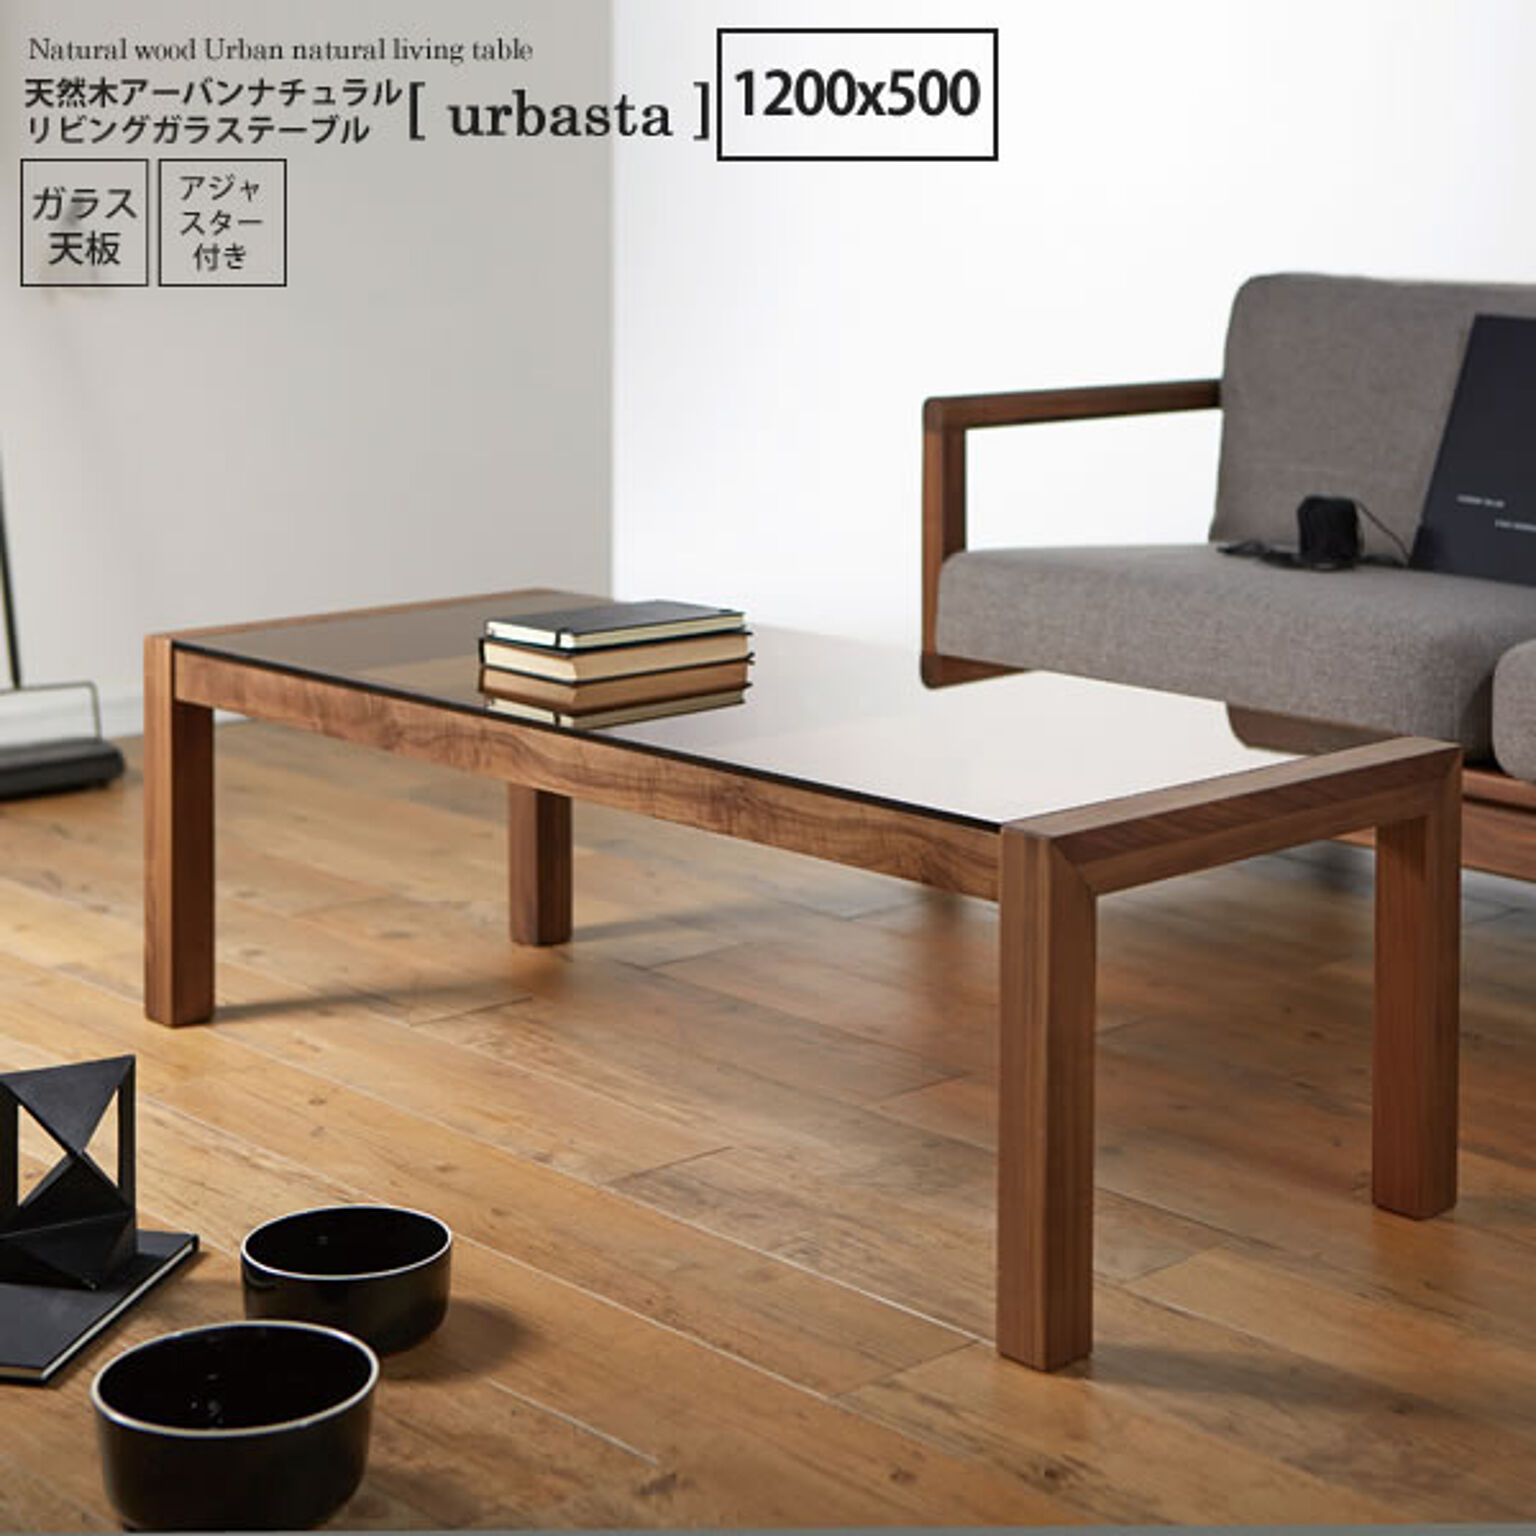 urbasta 天然木製 リビングガラステーブル ブラウン 1200x500